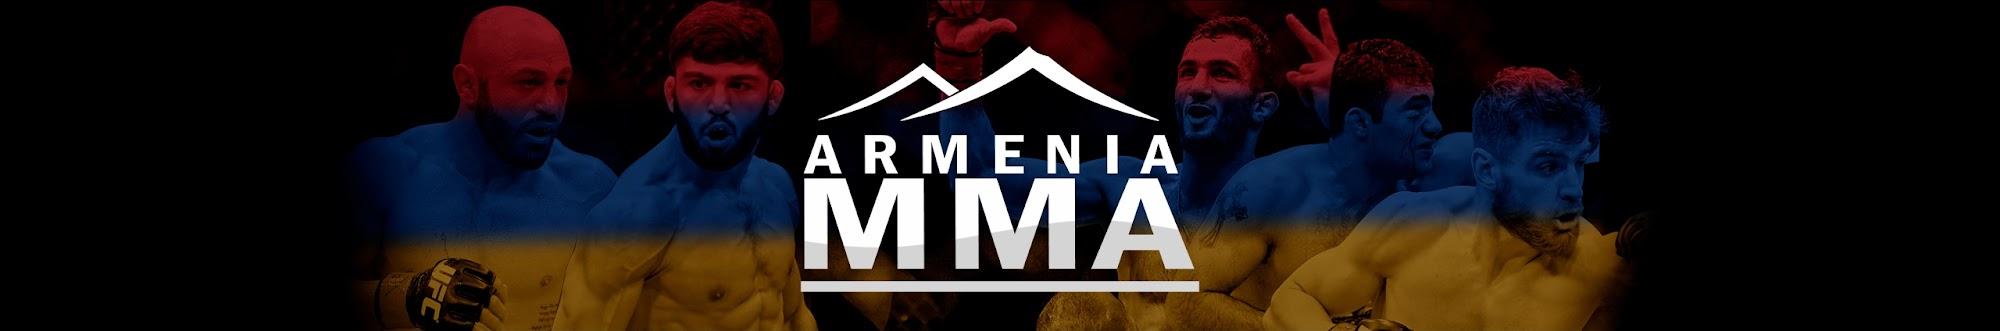 Armenia MMA